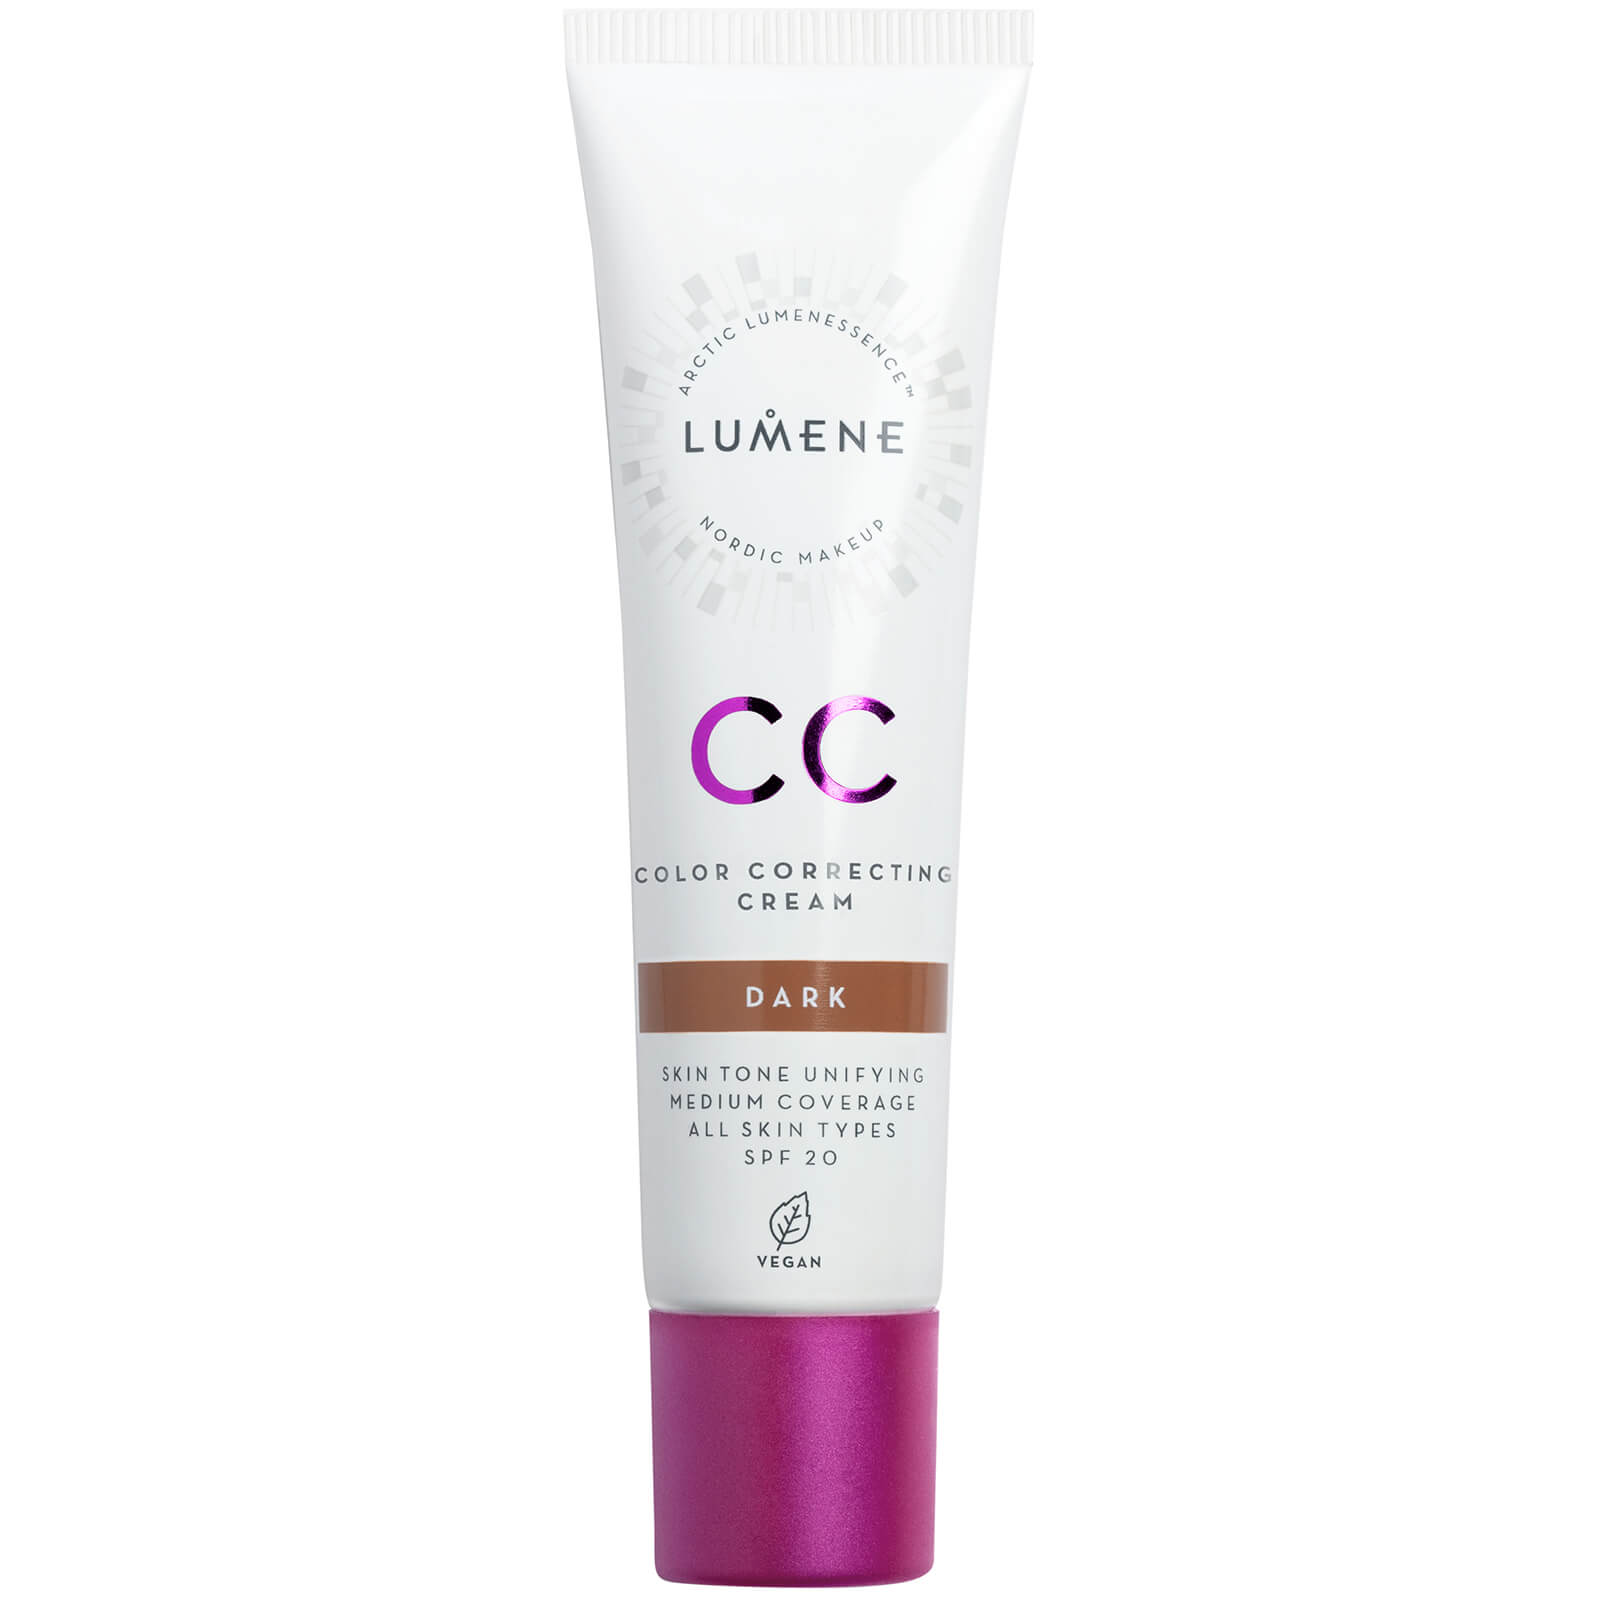 Lumene Cc Colour Correcting Cream Spf20 30ml (various Shades) - Dark